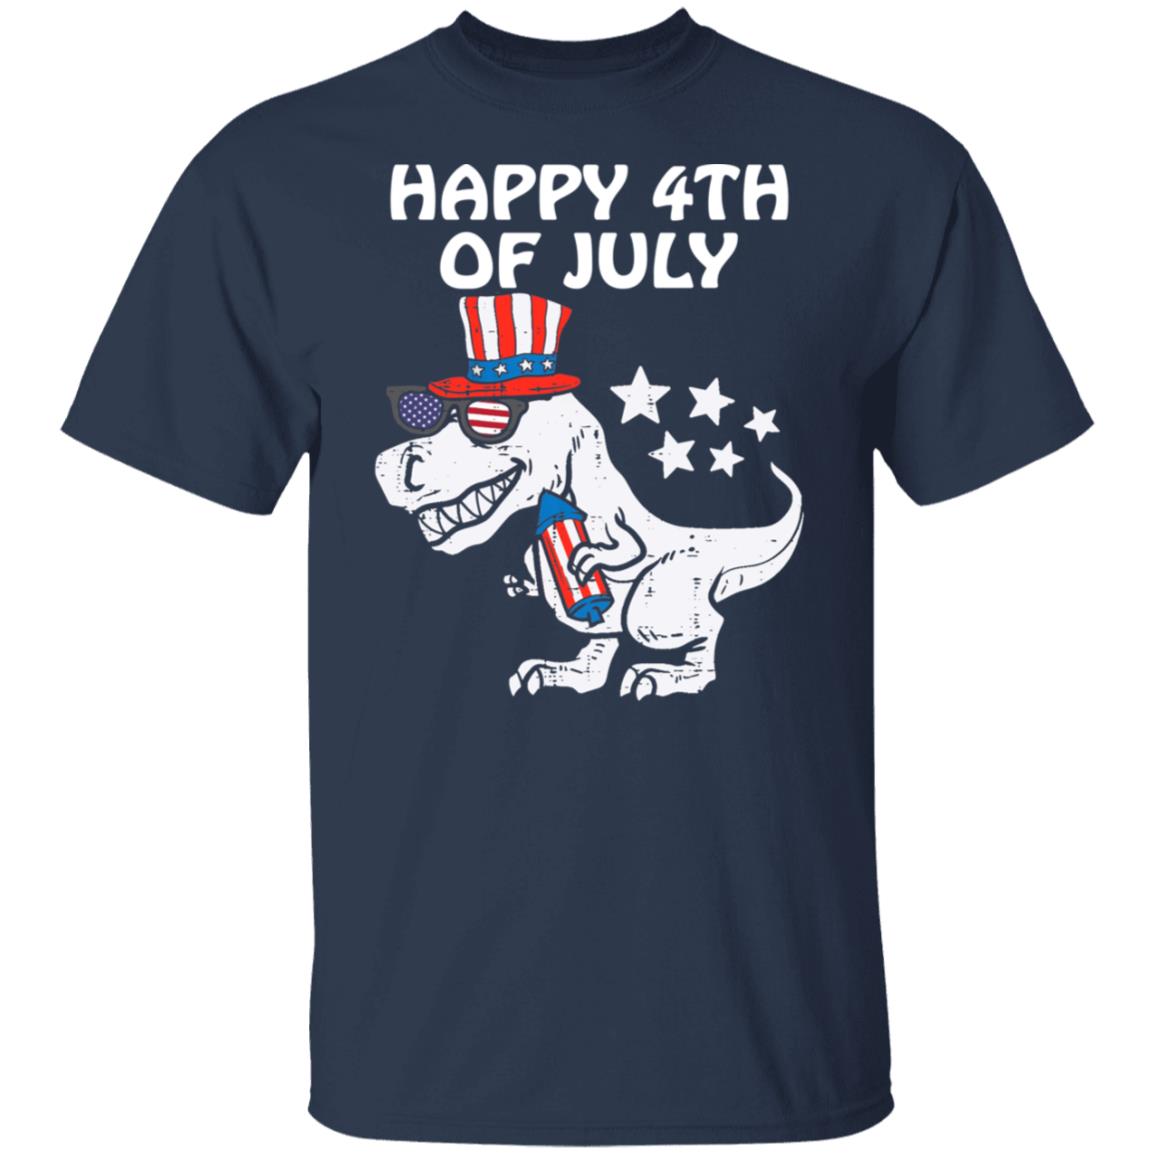 Happy 4th Of July T-Rex Dino Dinosaur Boys Kids T-Shirt